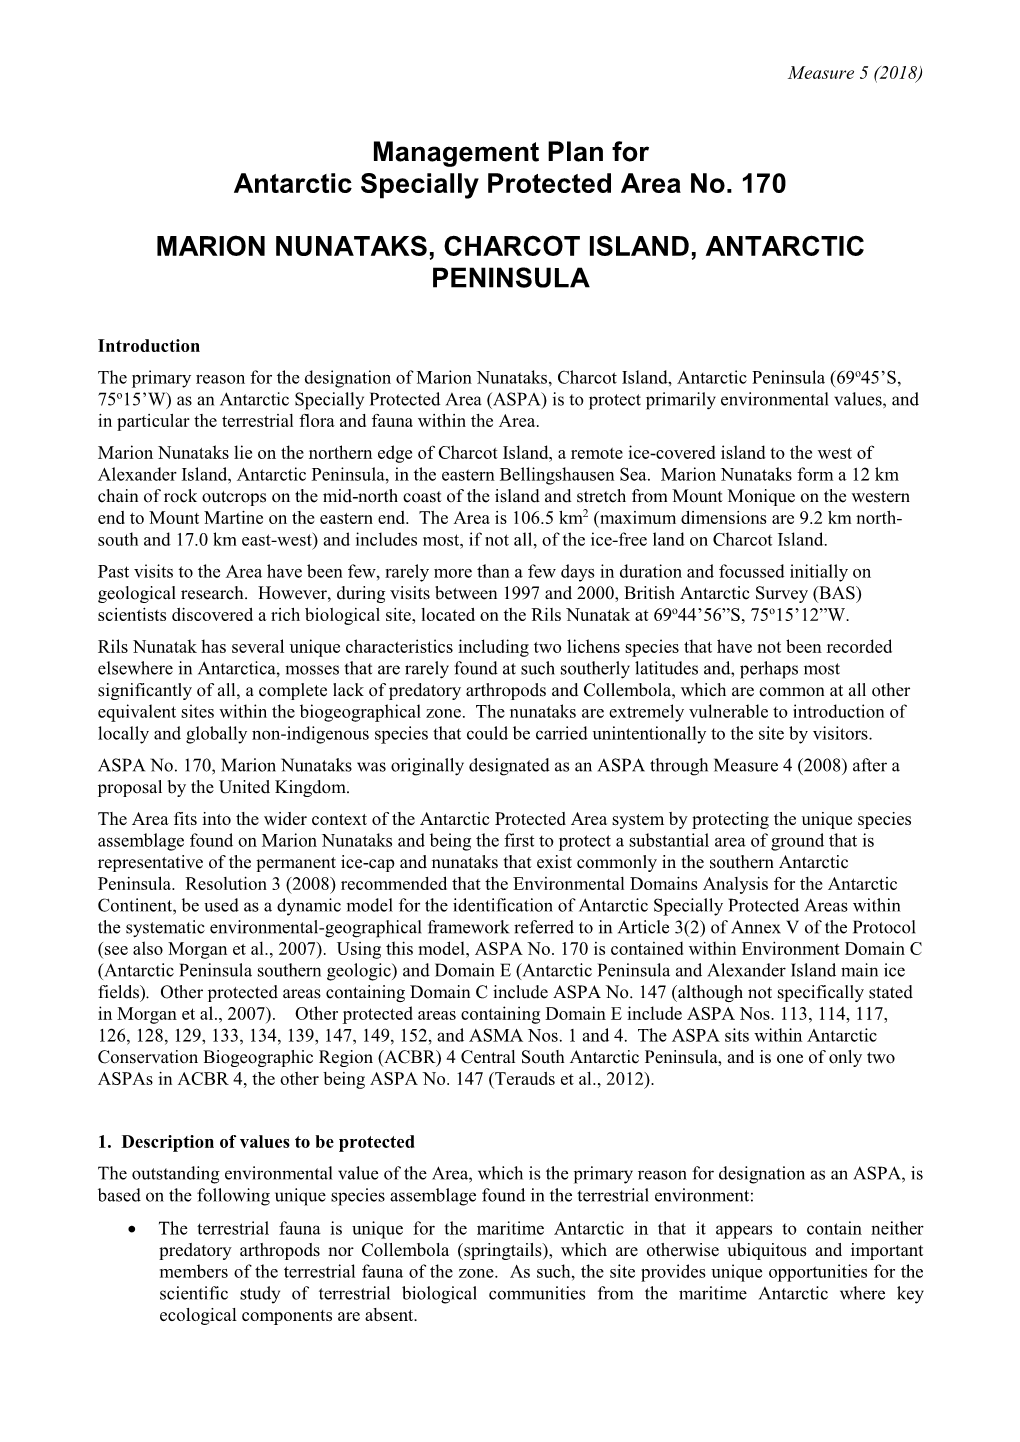 Management Plan for Antarctic Specially Protected Area No. 170 MARION NUNATAKS, CHARCOT ISLAND, ANTARCTIC PENINSULA